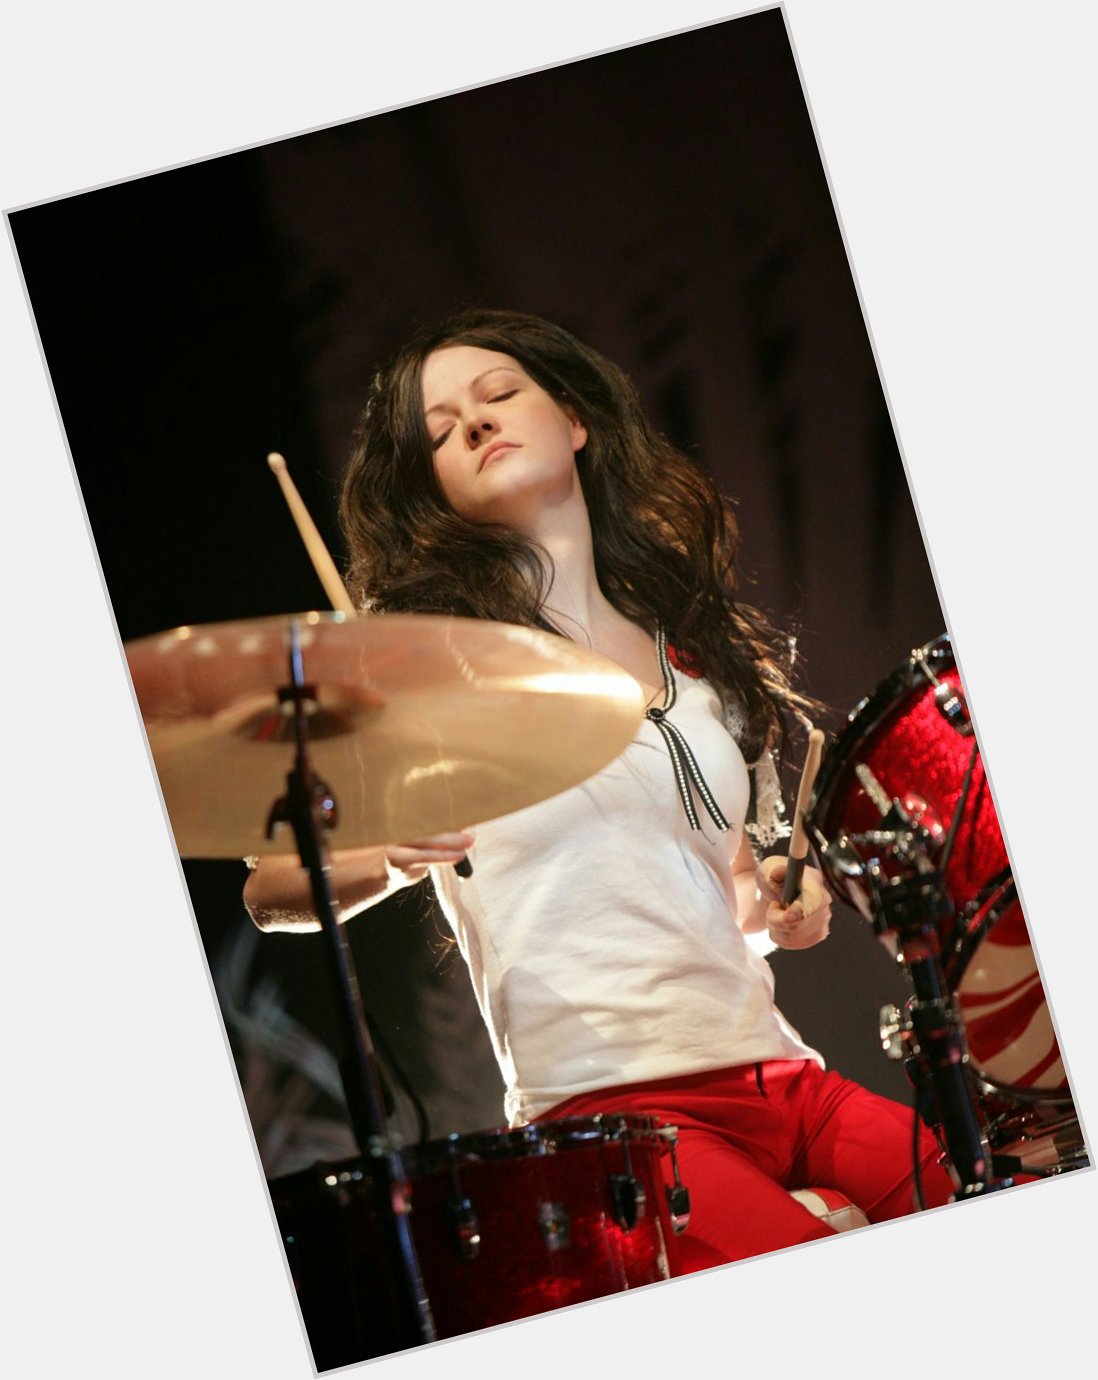 Today in 1974 the drummer Meg White (of White Stripes fame) was born. Happy birthday, Meg! 